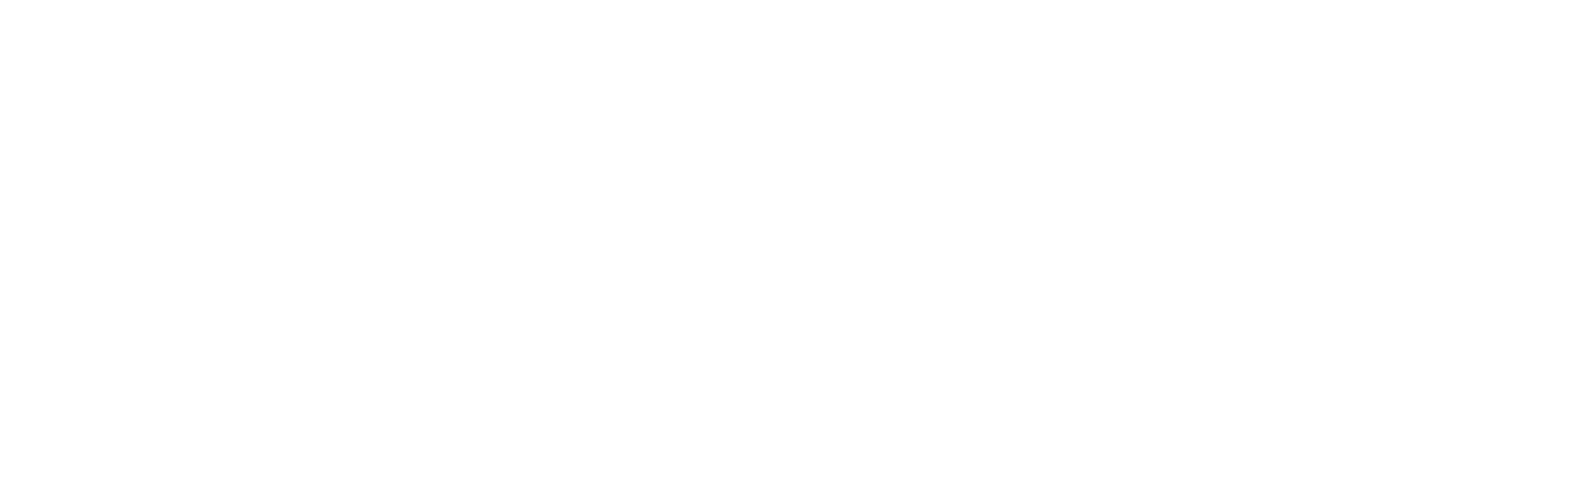 1stdibs.Com Logo groß für dunkle Hintergründe (transparentes PNG)